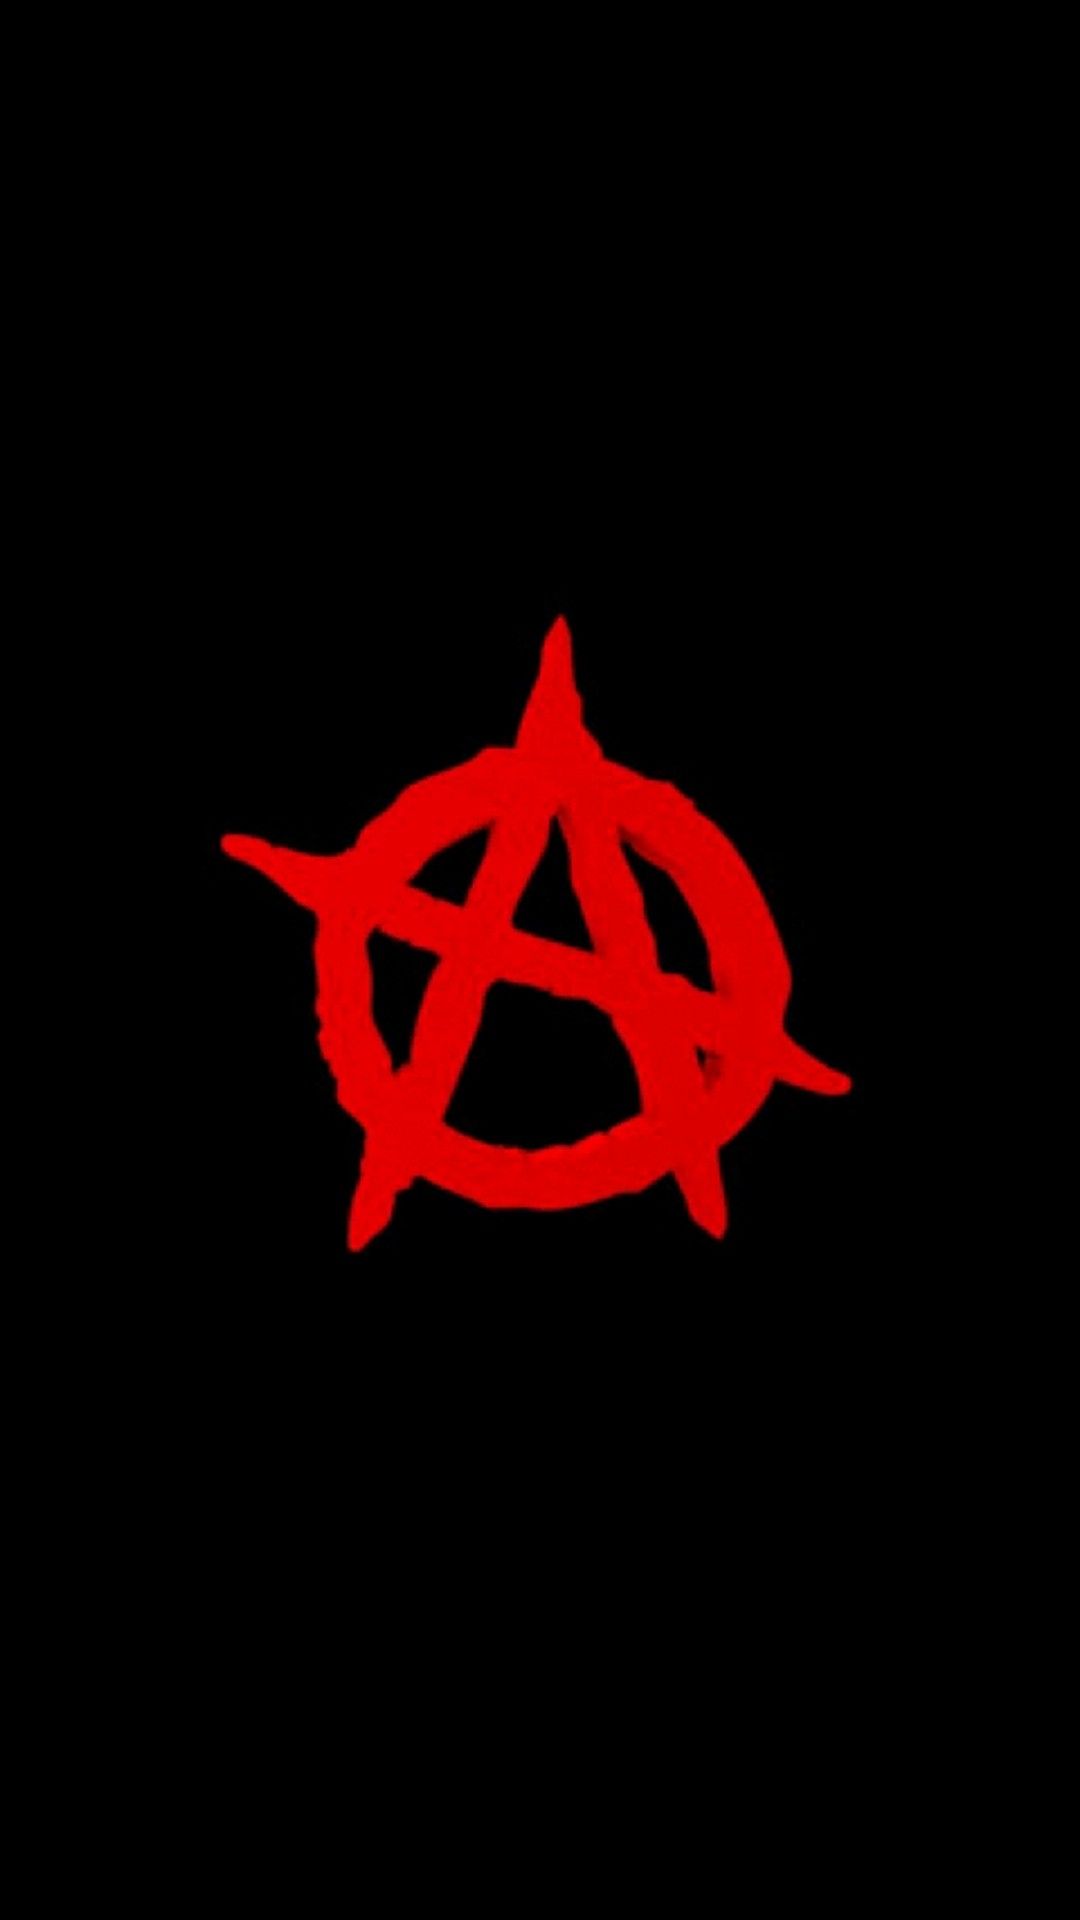 Wallpaper Anarchism Art Anarchist